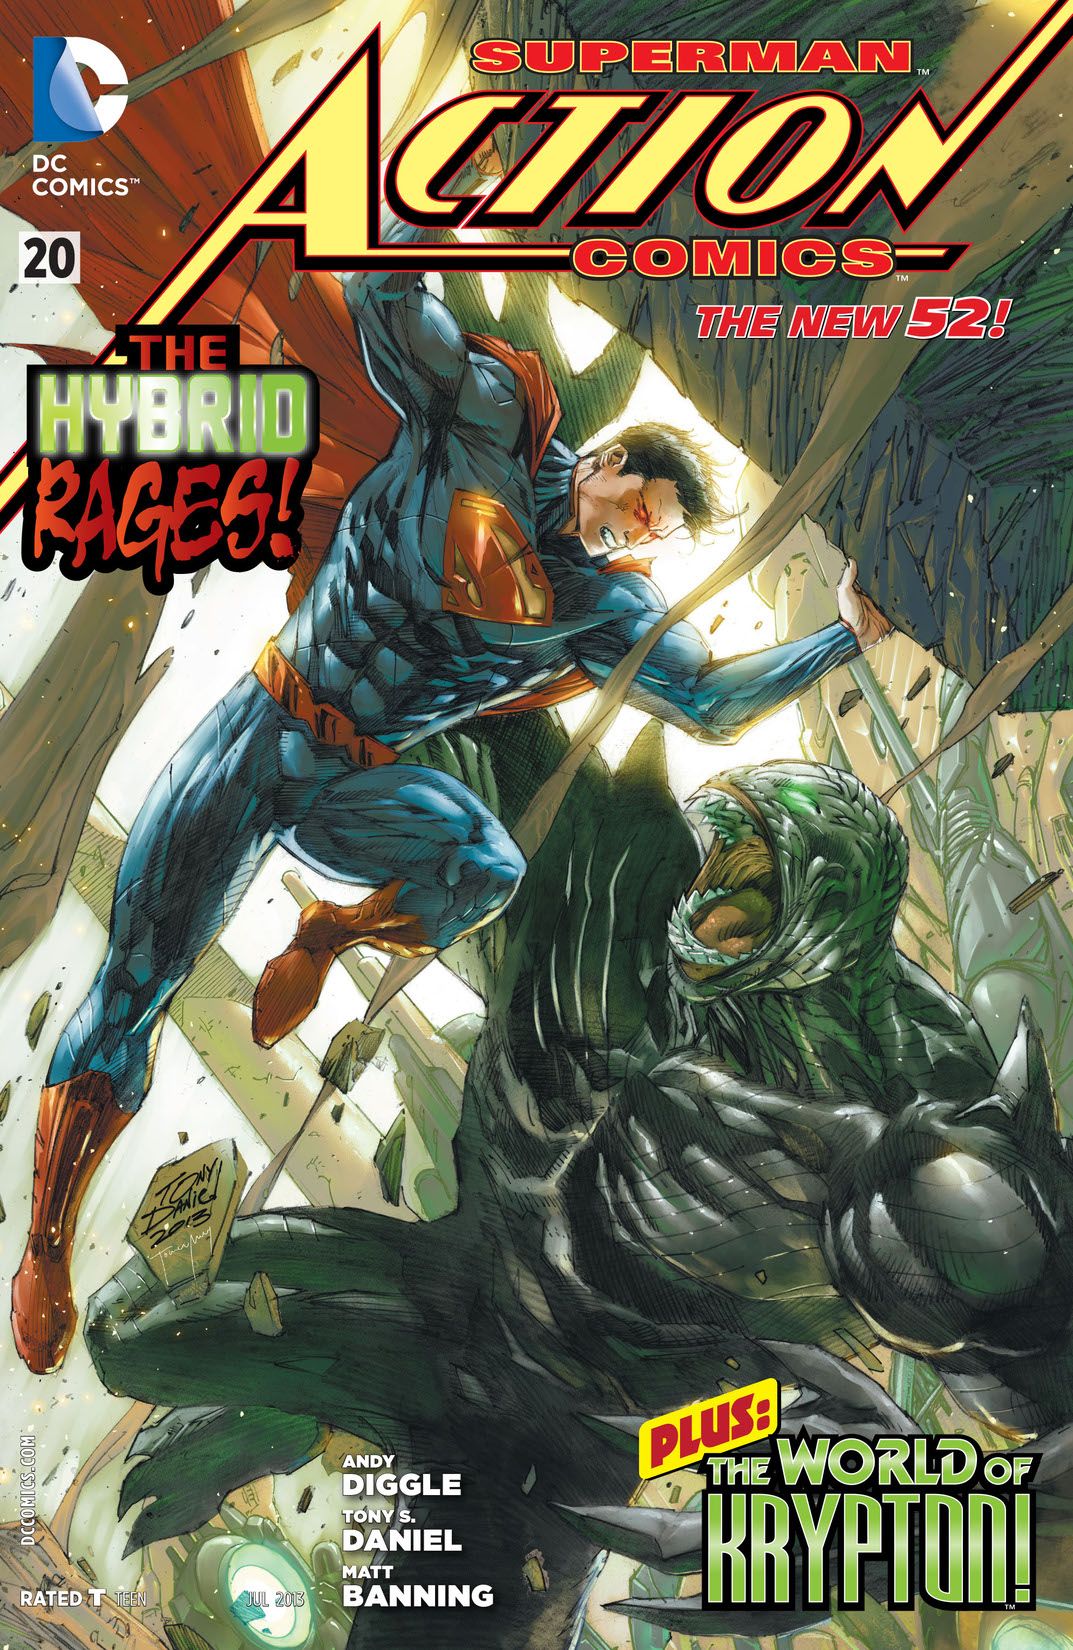 Action Comics (2011-) #20 preview images